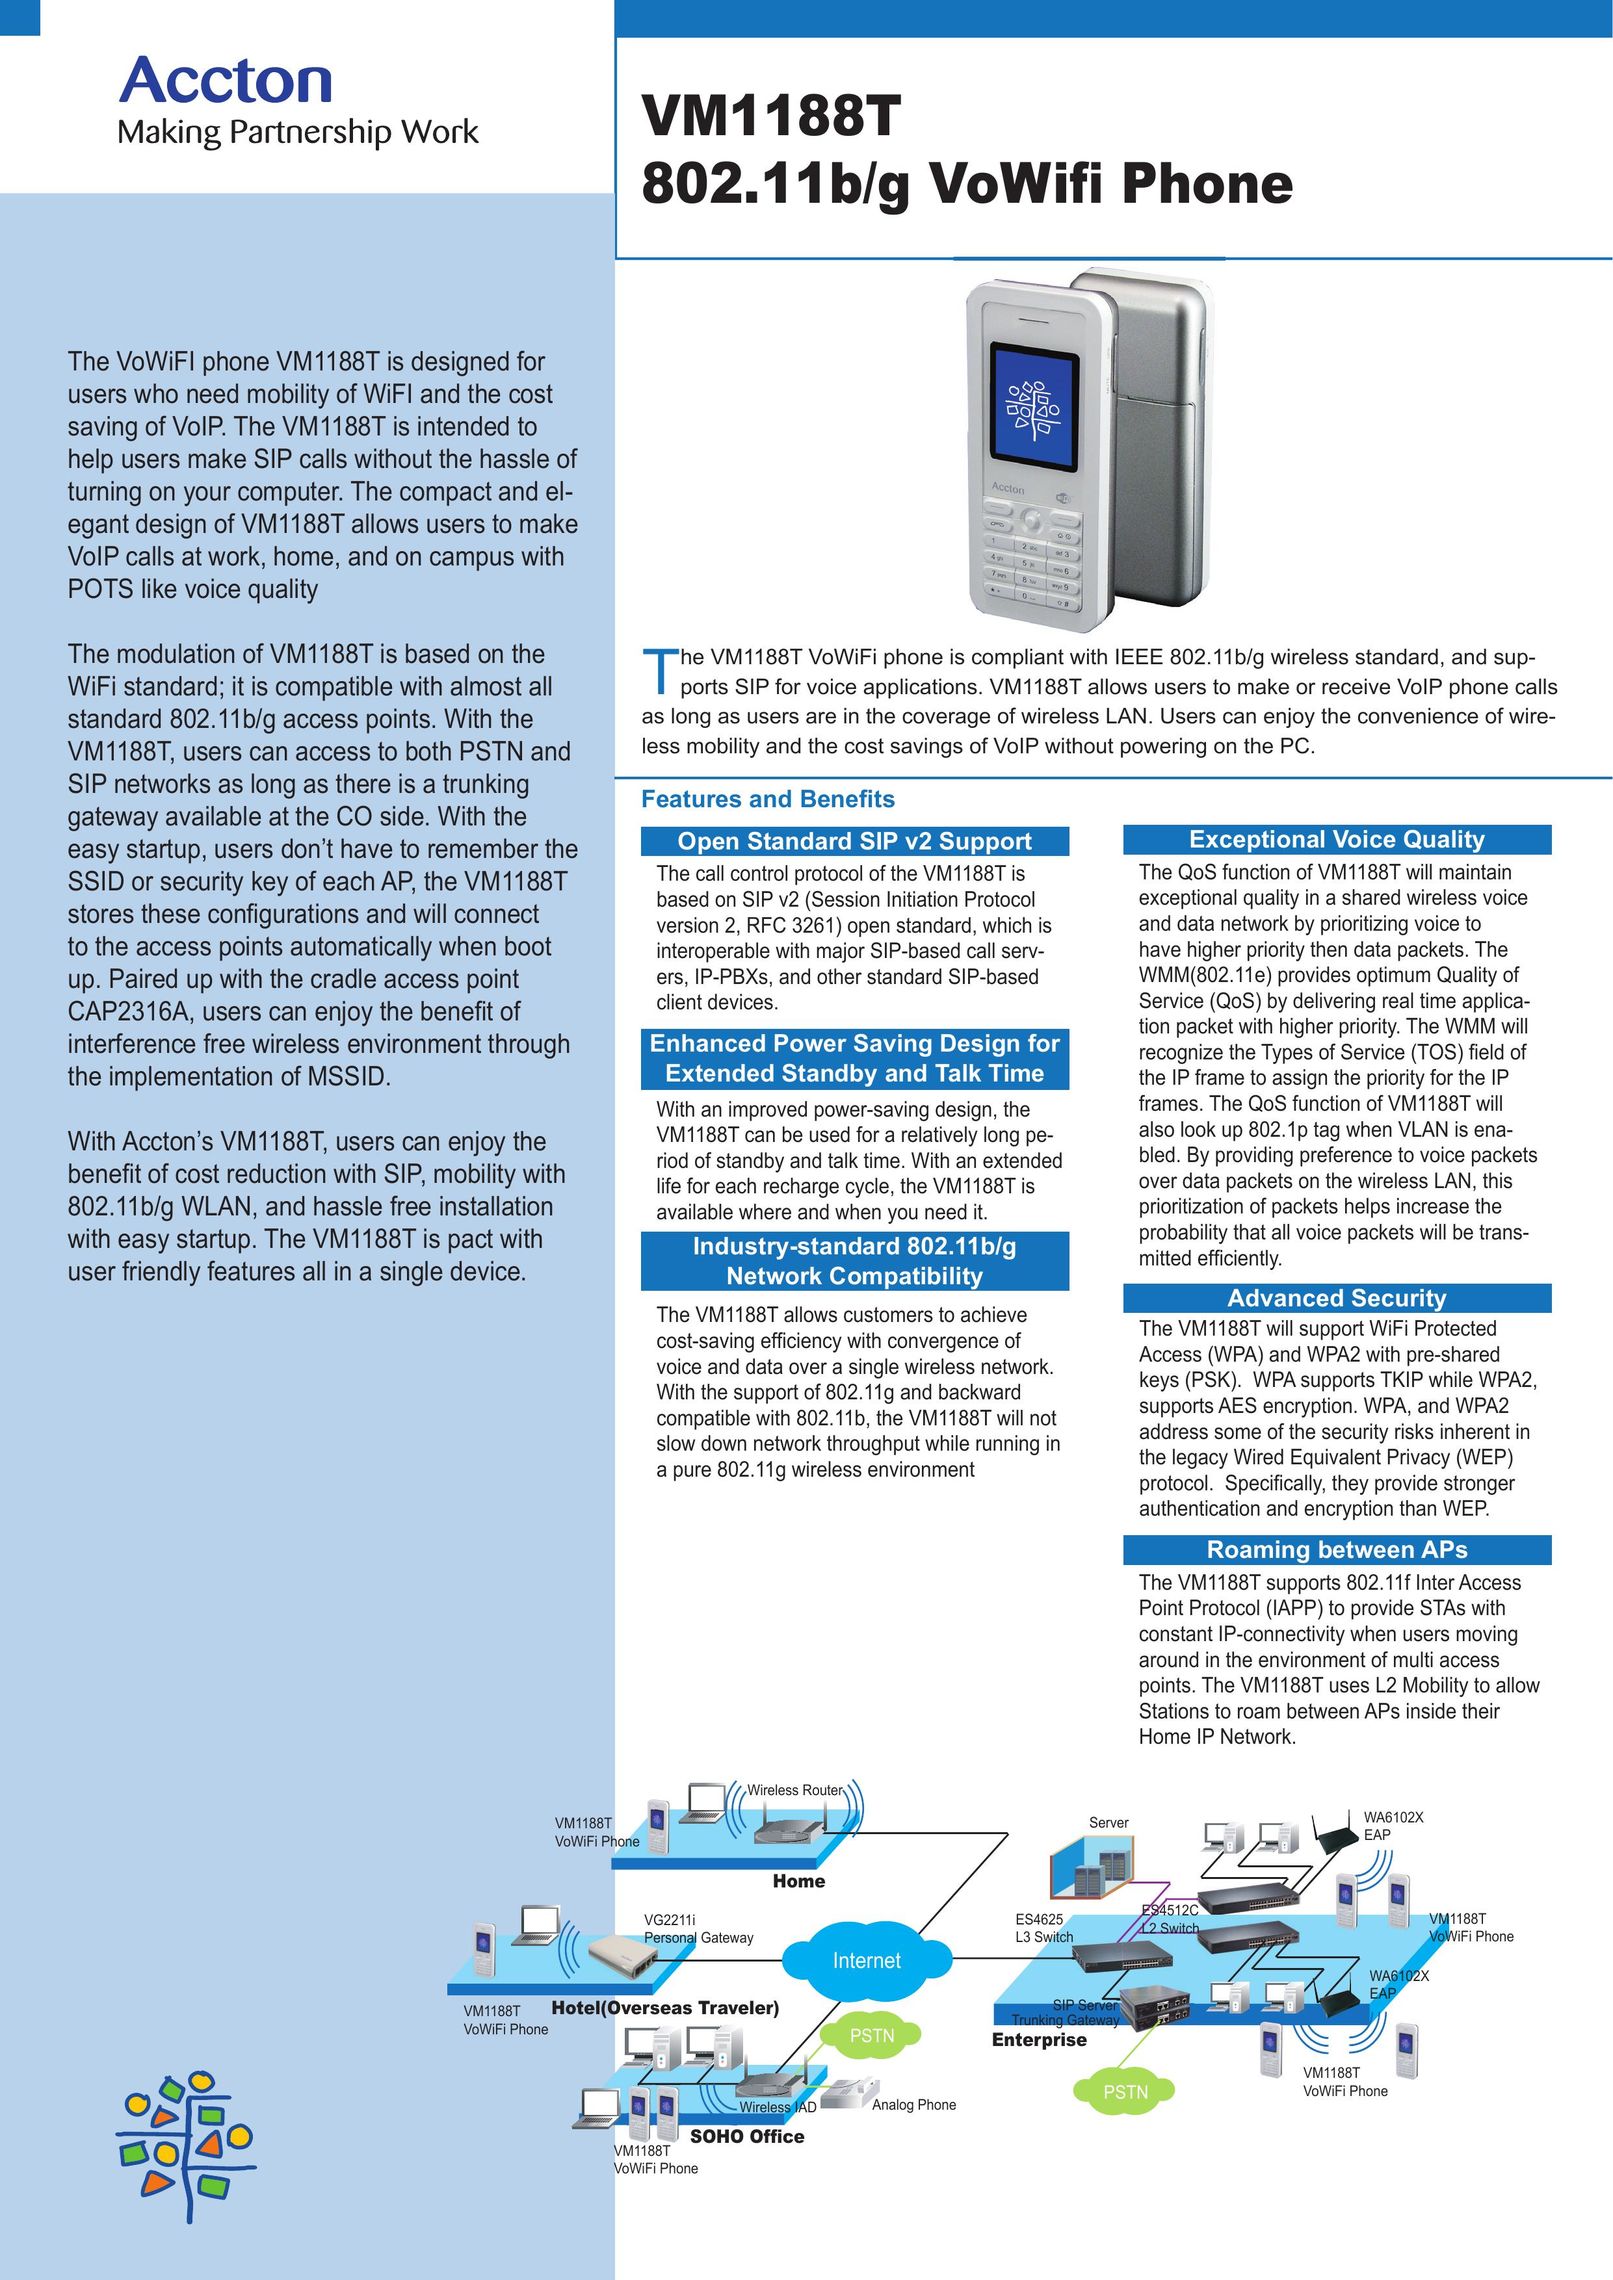 Accton Technology VM1188T IP Phone User Manual